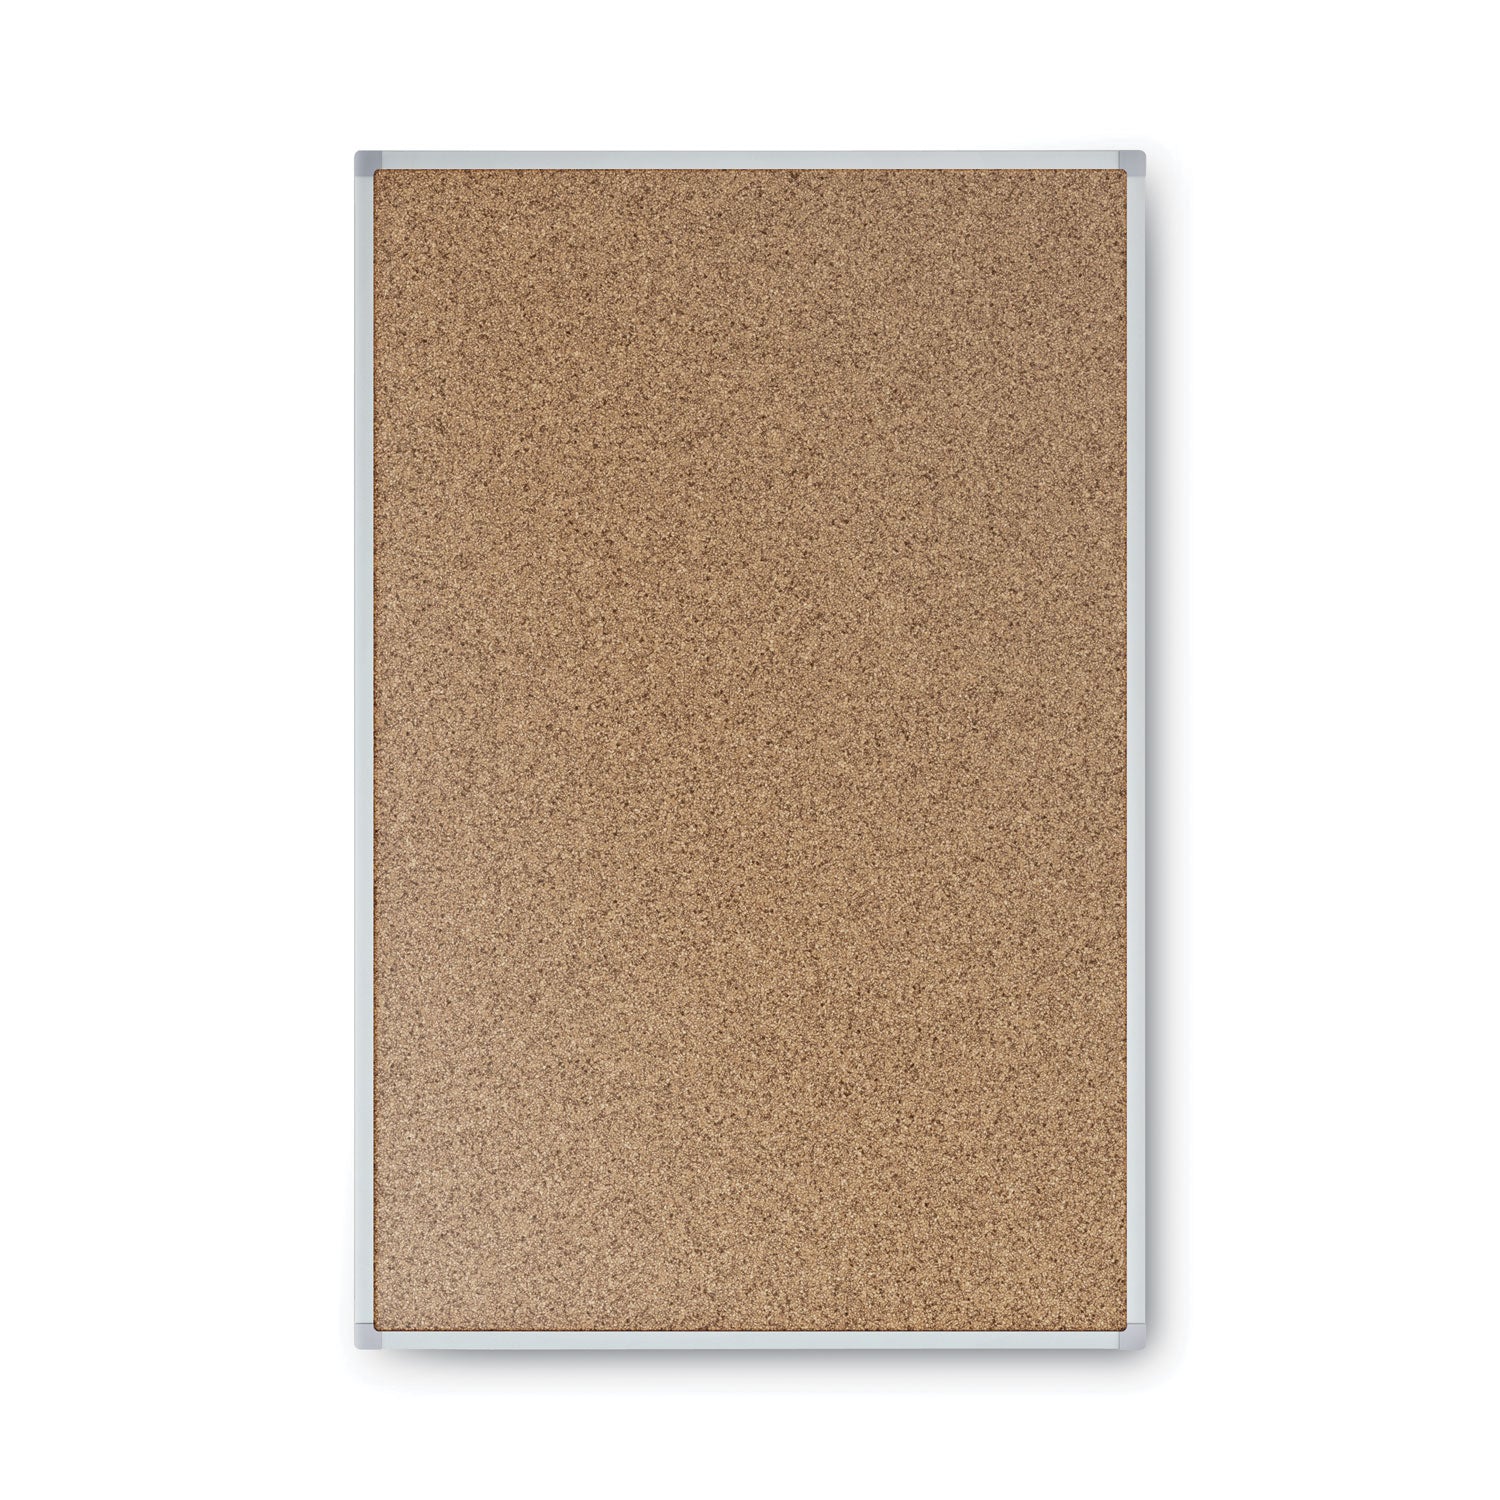 Economy Cork Board with Aluminum Frame, 24 x 18, Tan Surface, Silver Aluminum Frame - 